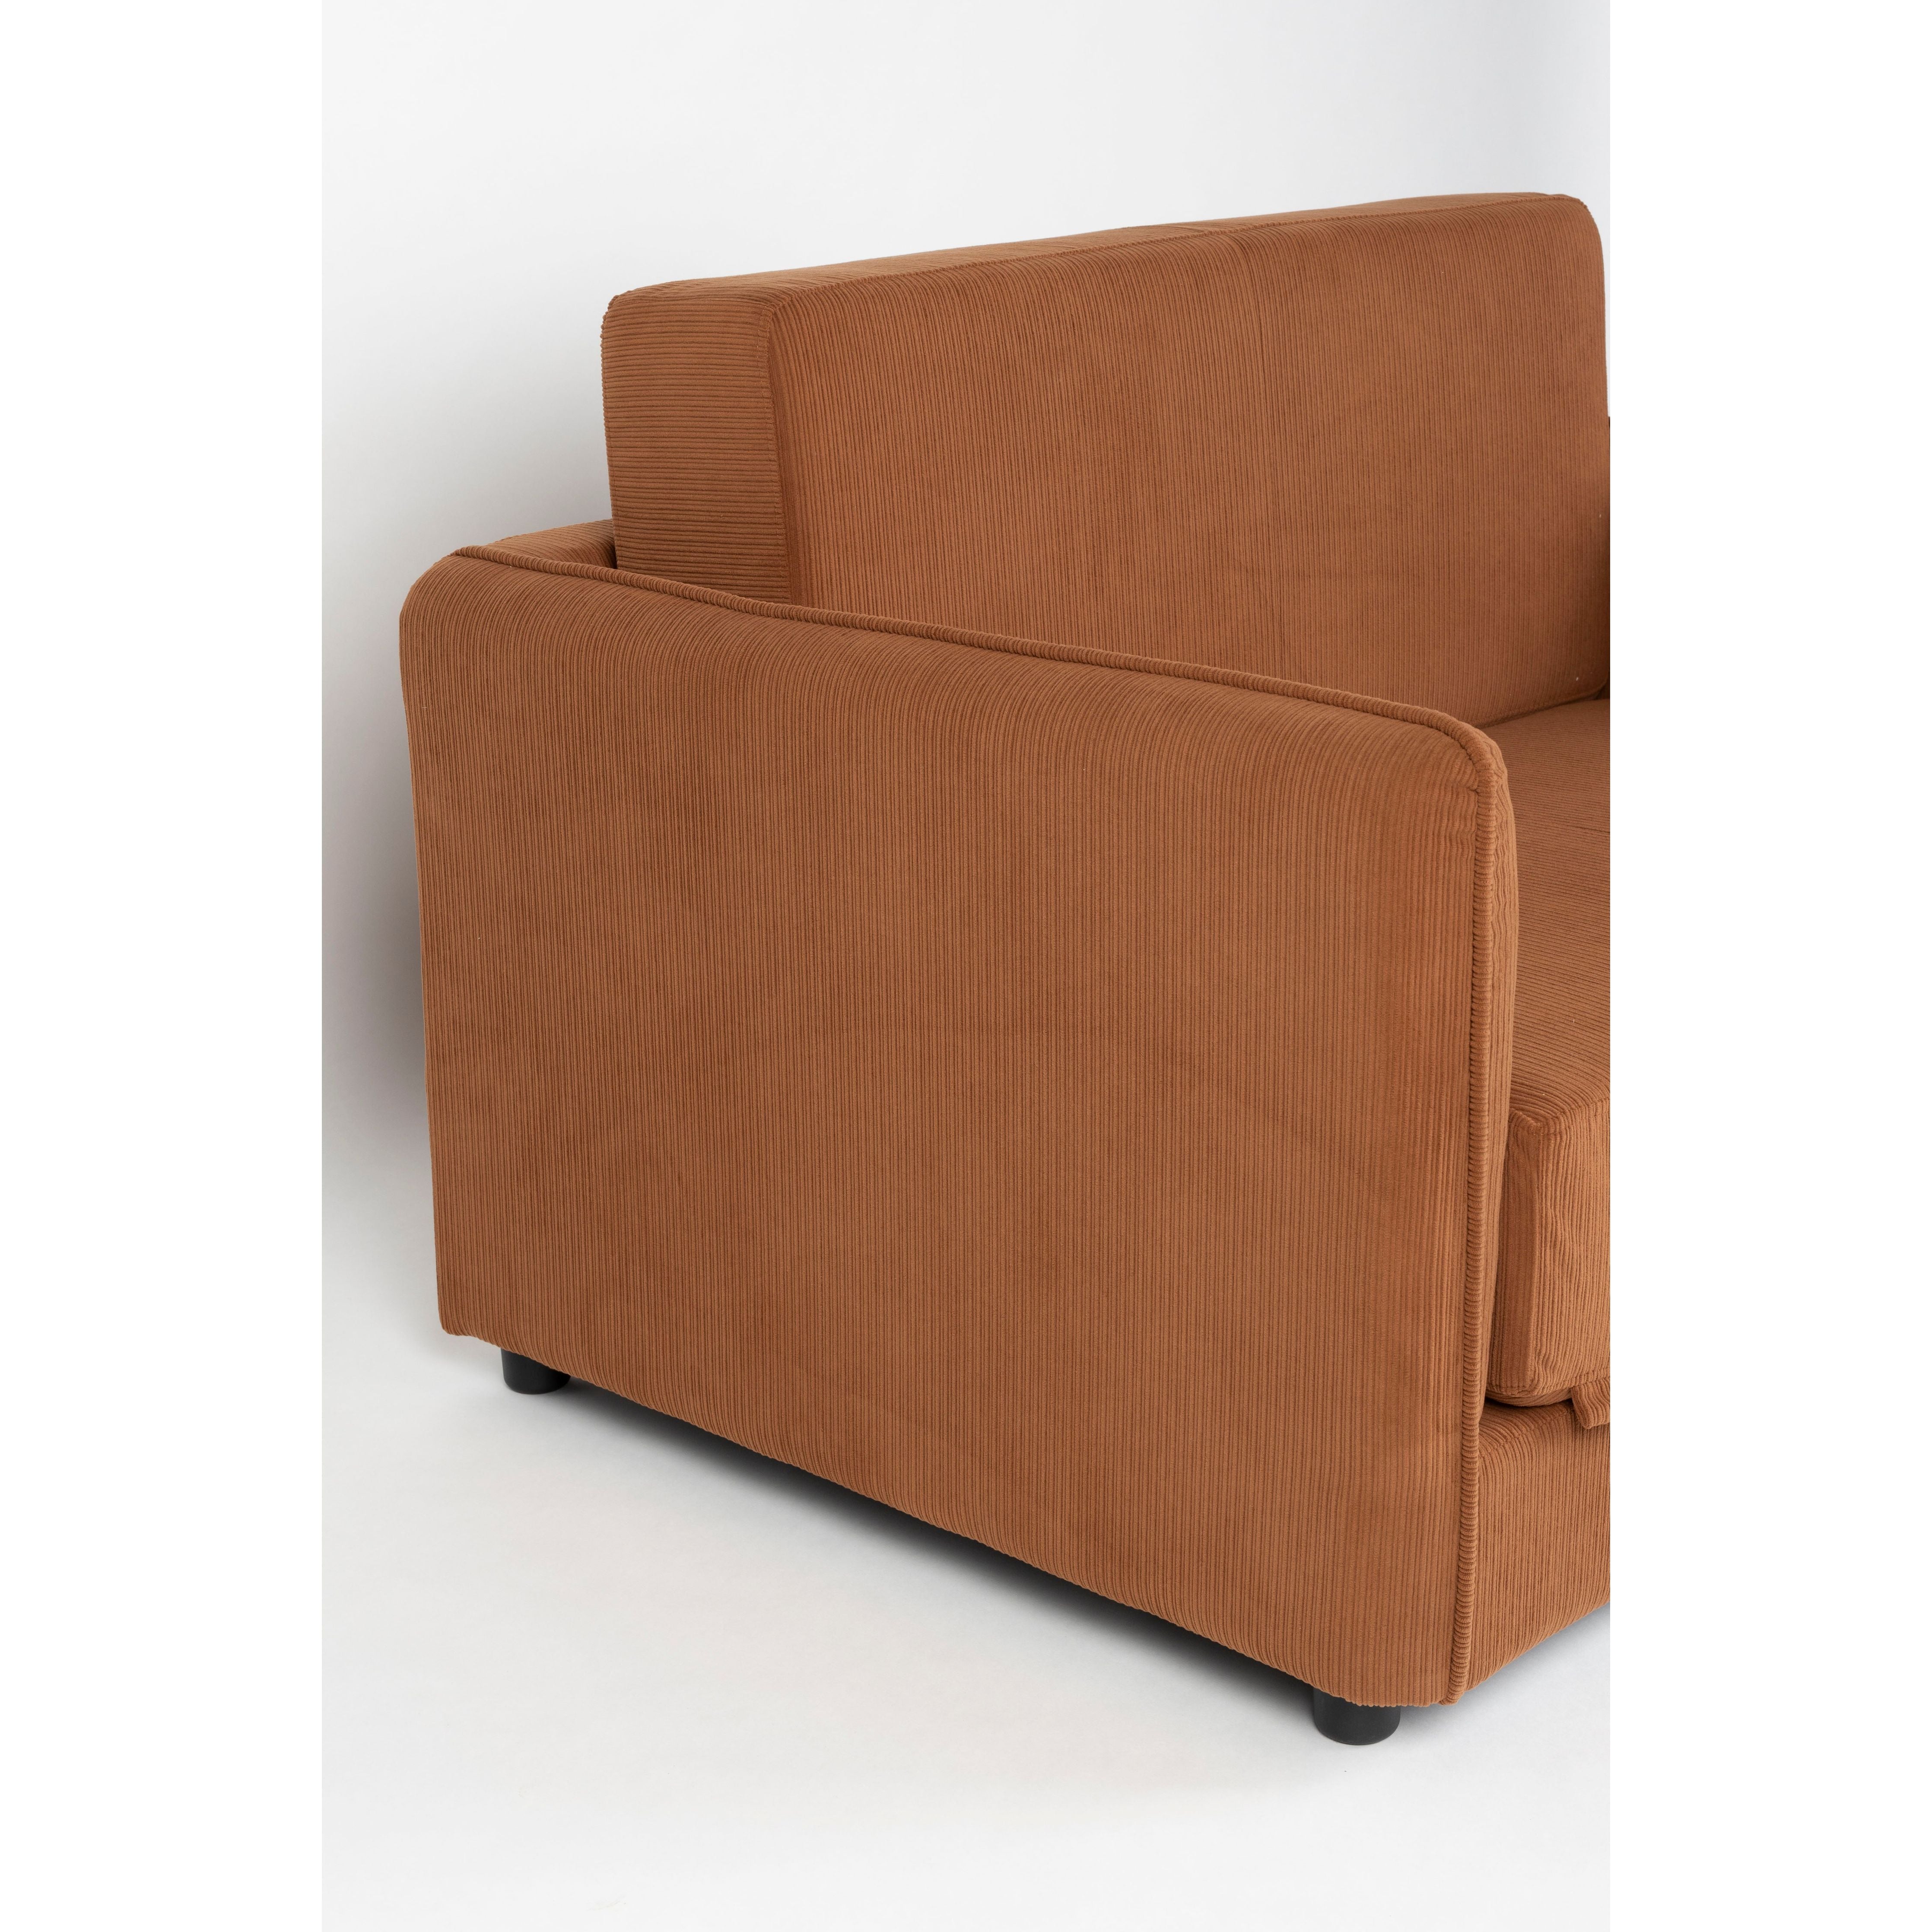 Love seat sofa bed Jopie brown